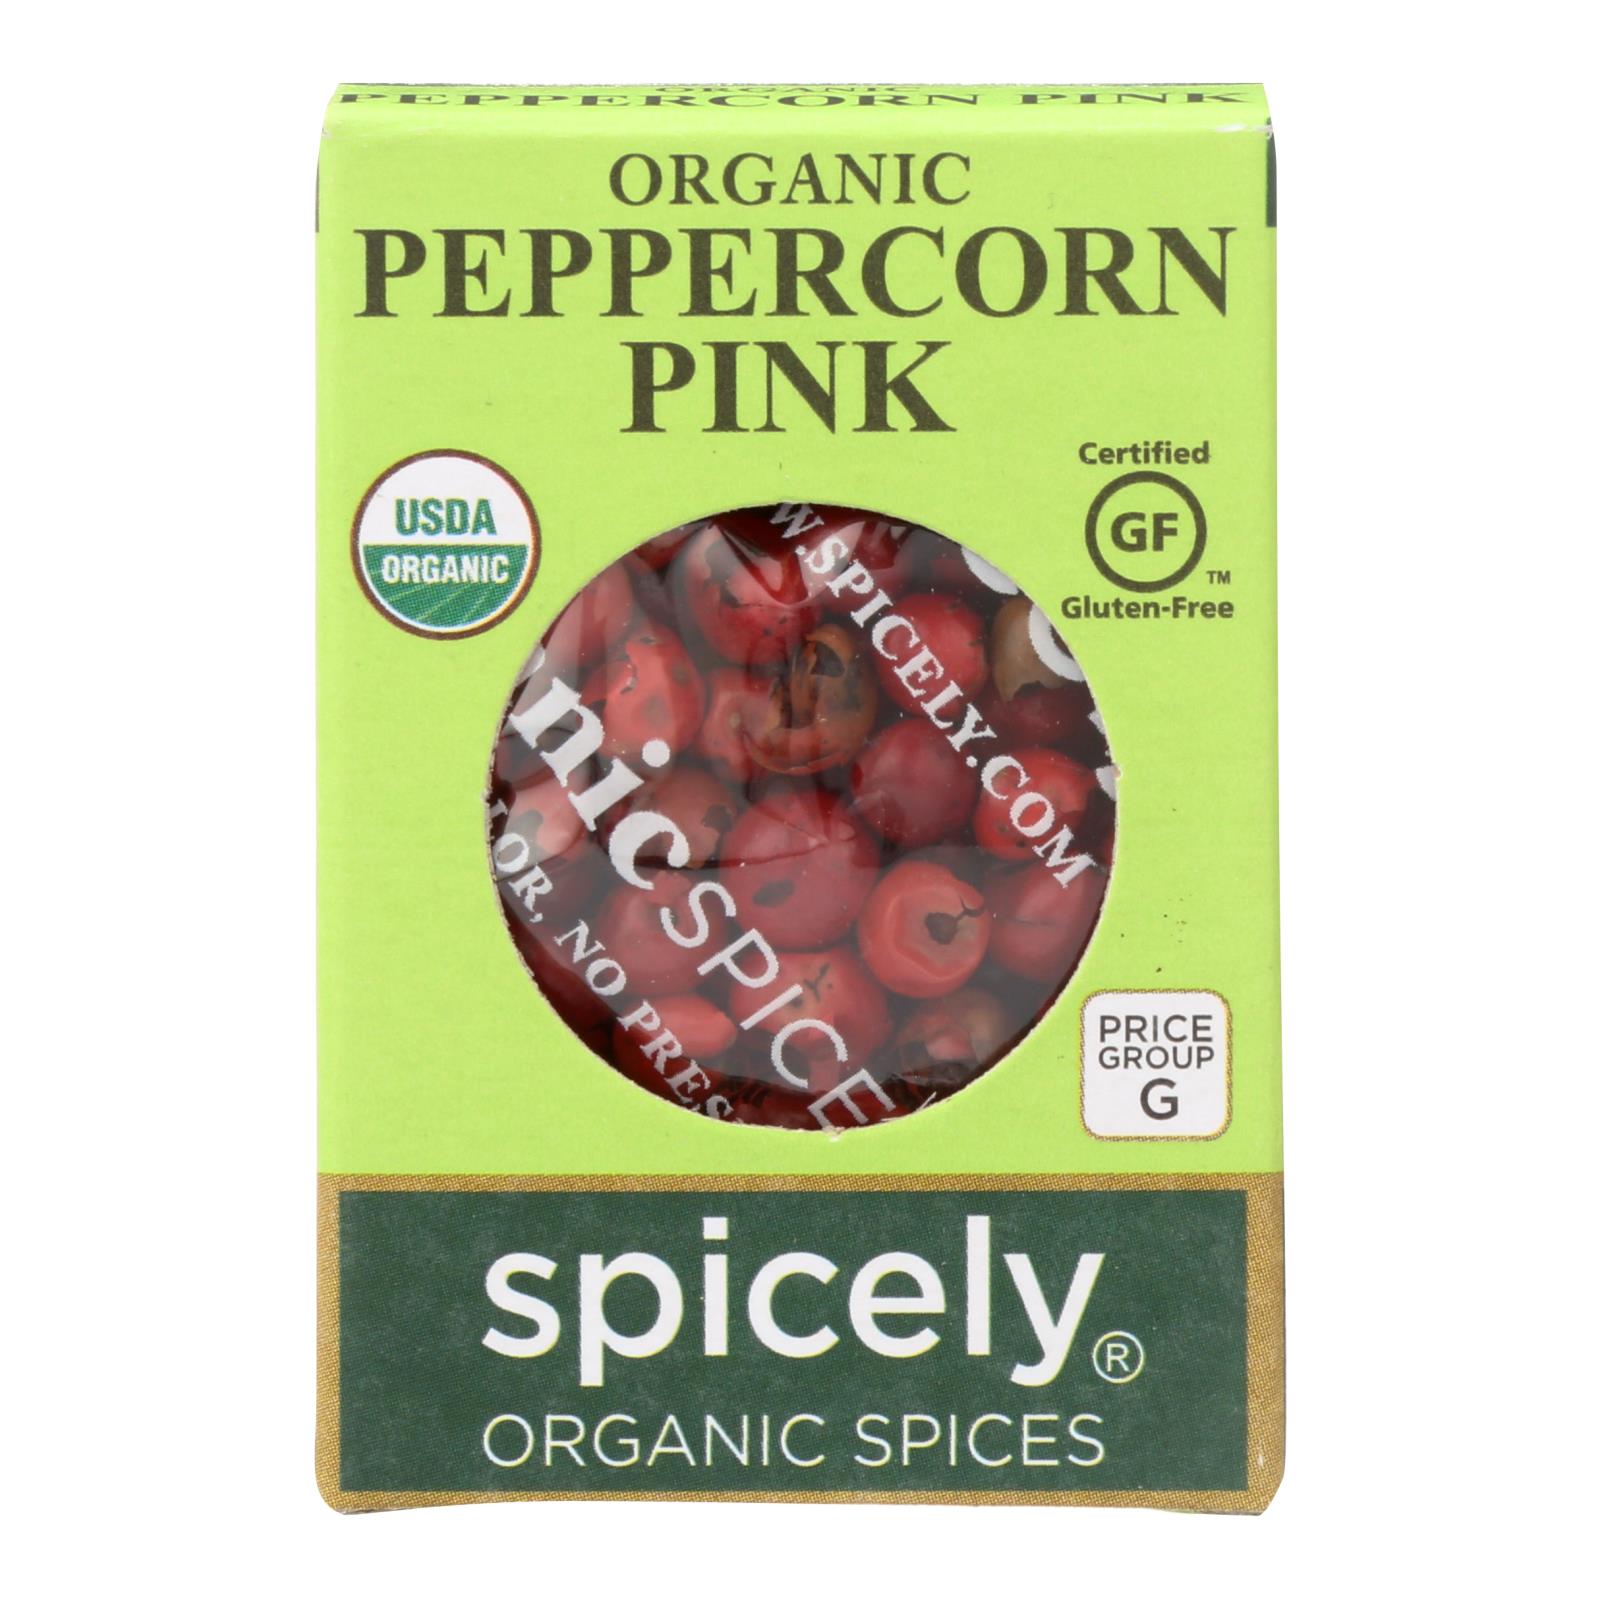 Spicely Organics - Organic Peppercorn - Pink - 6개 묶음상품 - 0.15 oz.